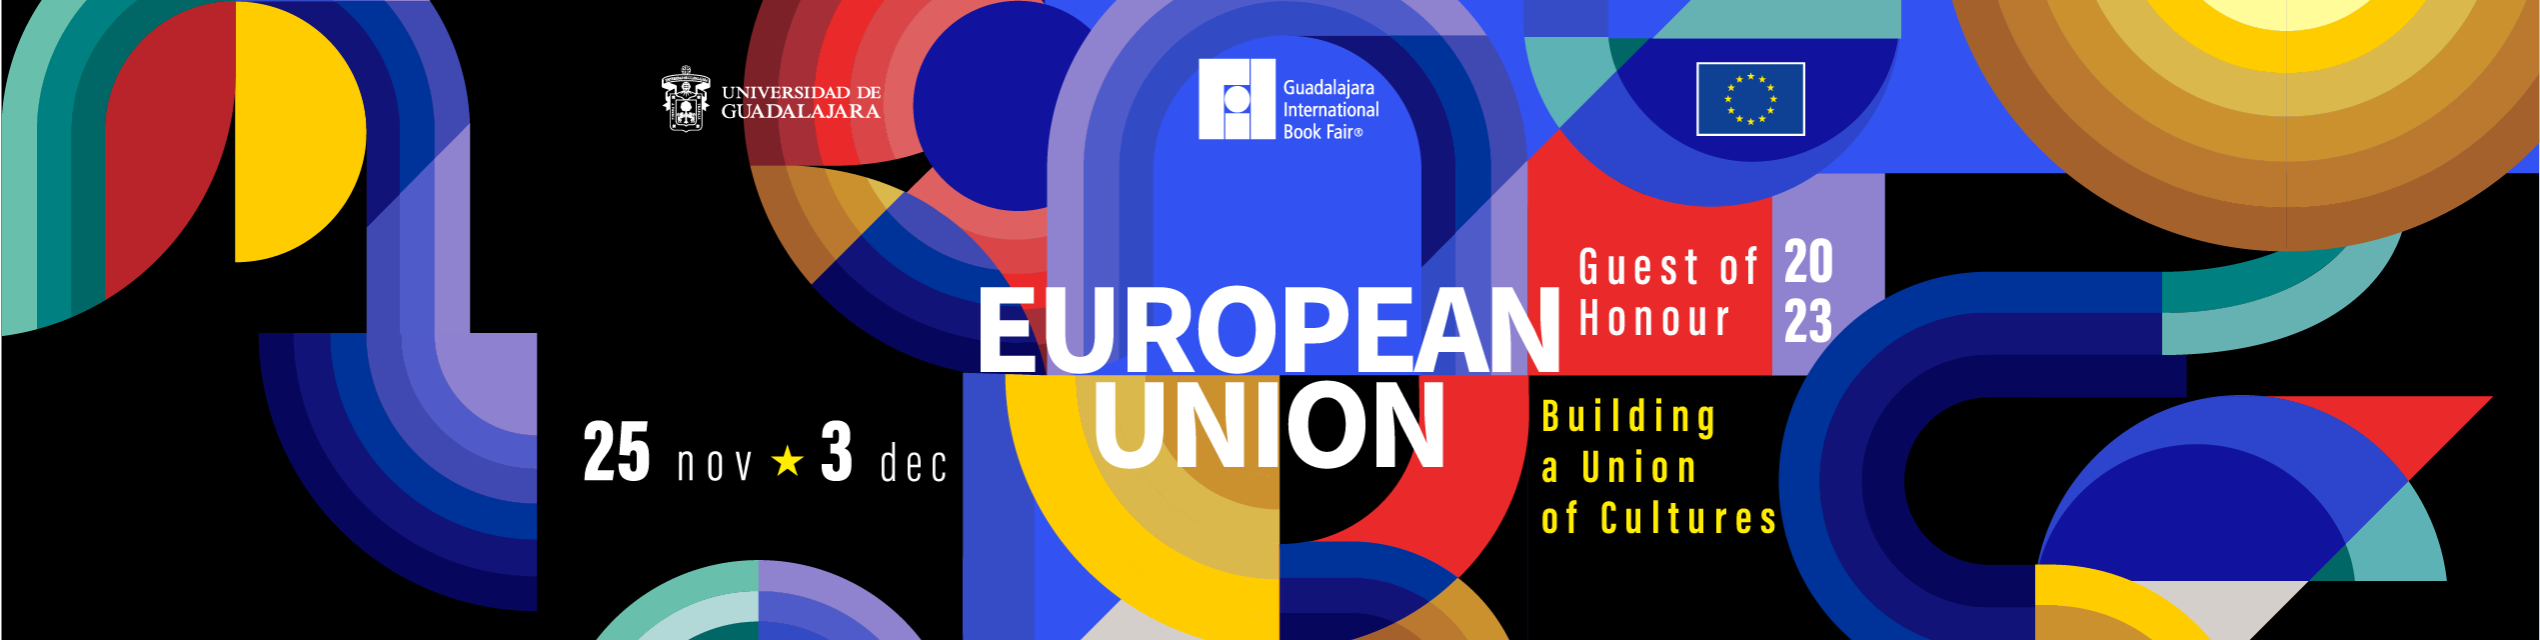 Banner Guadalajara International Book Fair - European Union as guest of honour. Building a Union of Cultures. 25 november - 3 december